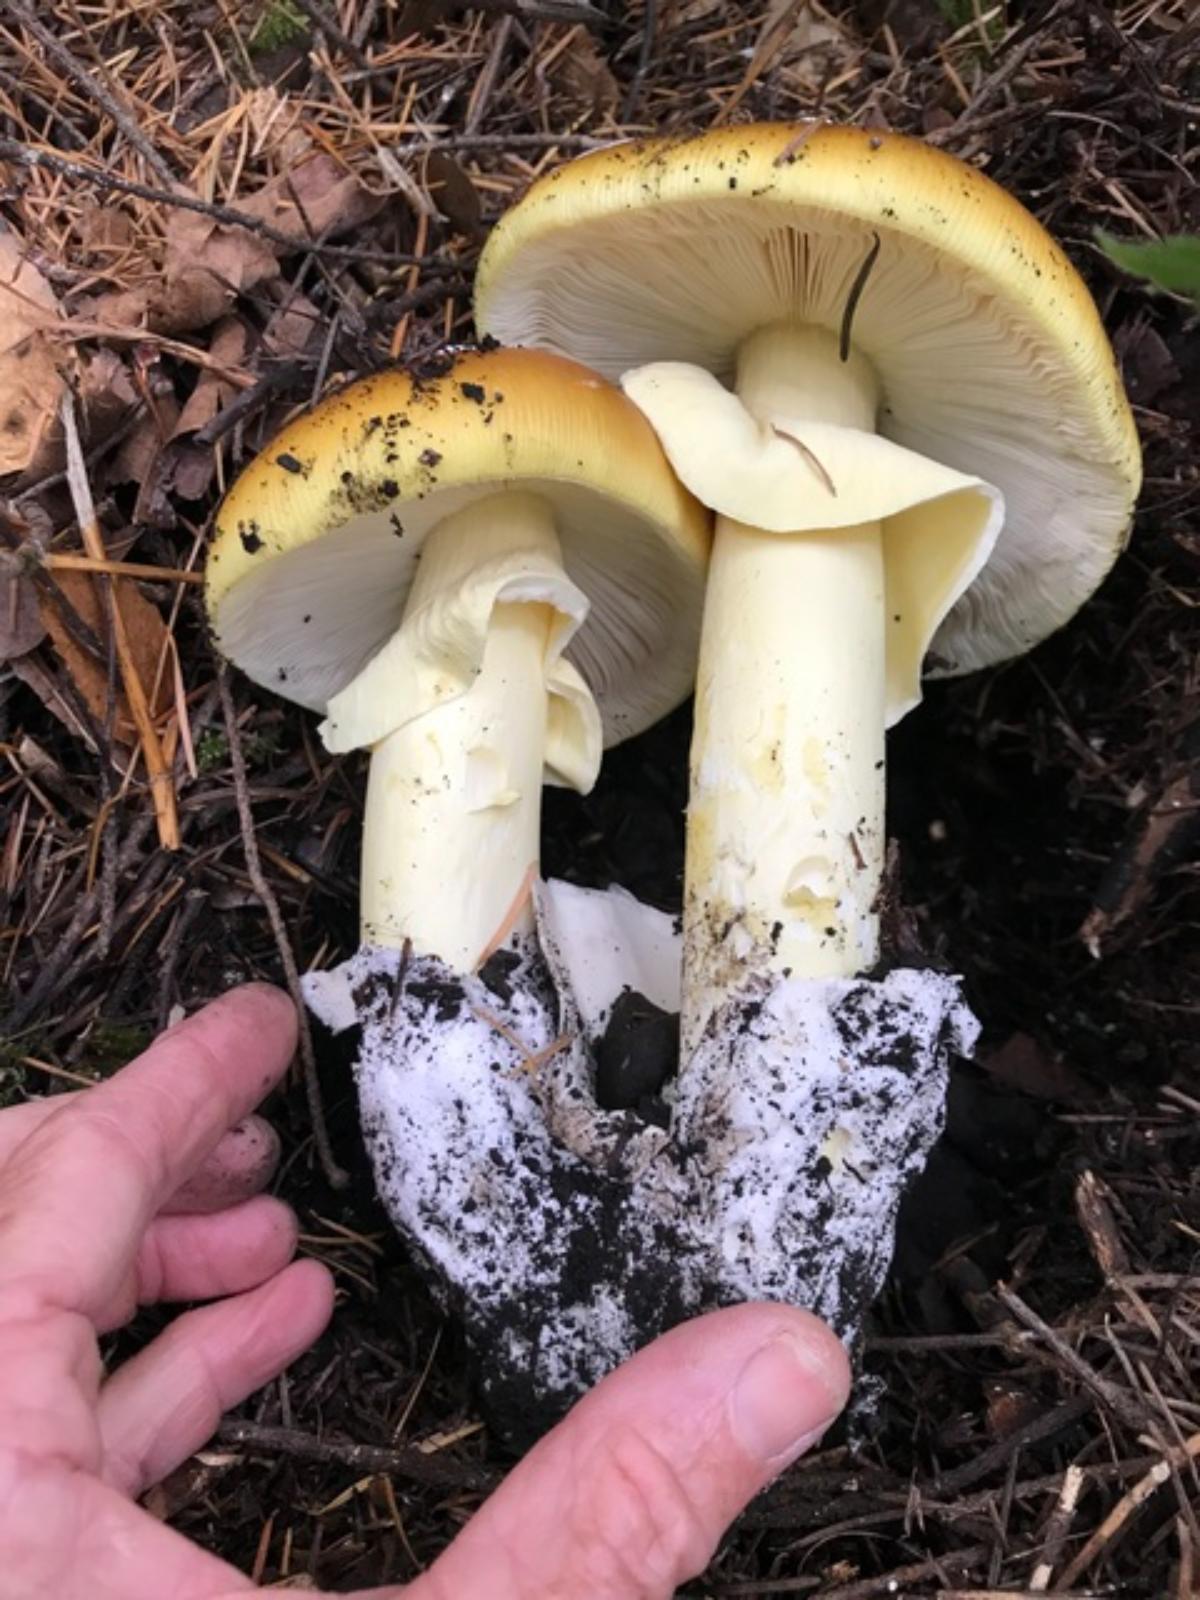 coccora mushroom caps, gills, and skirt